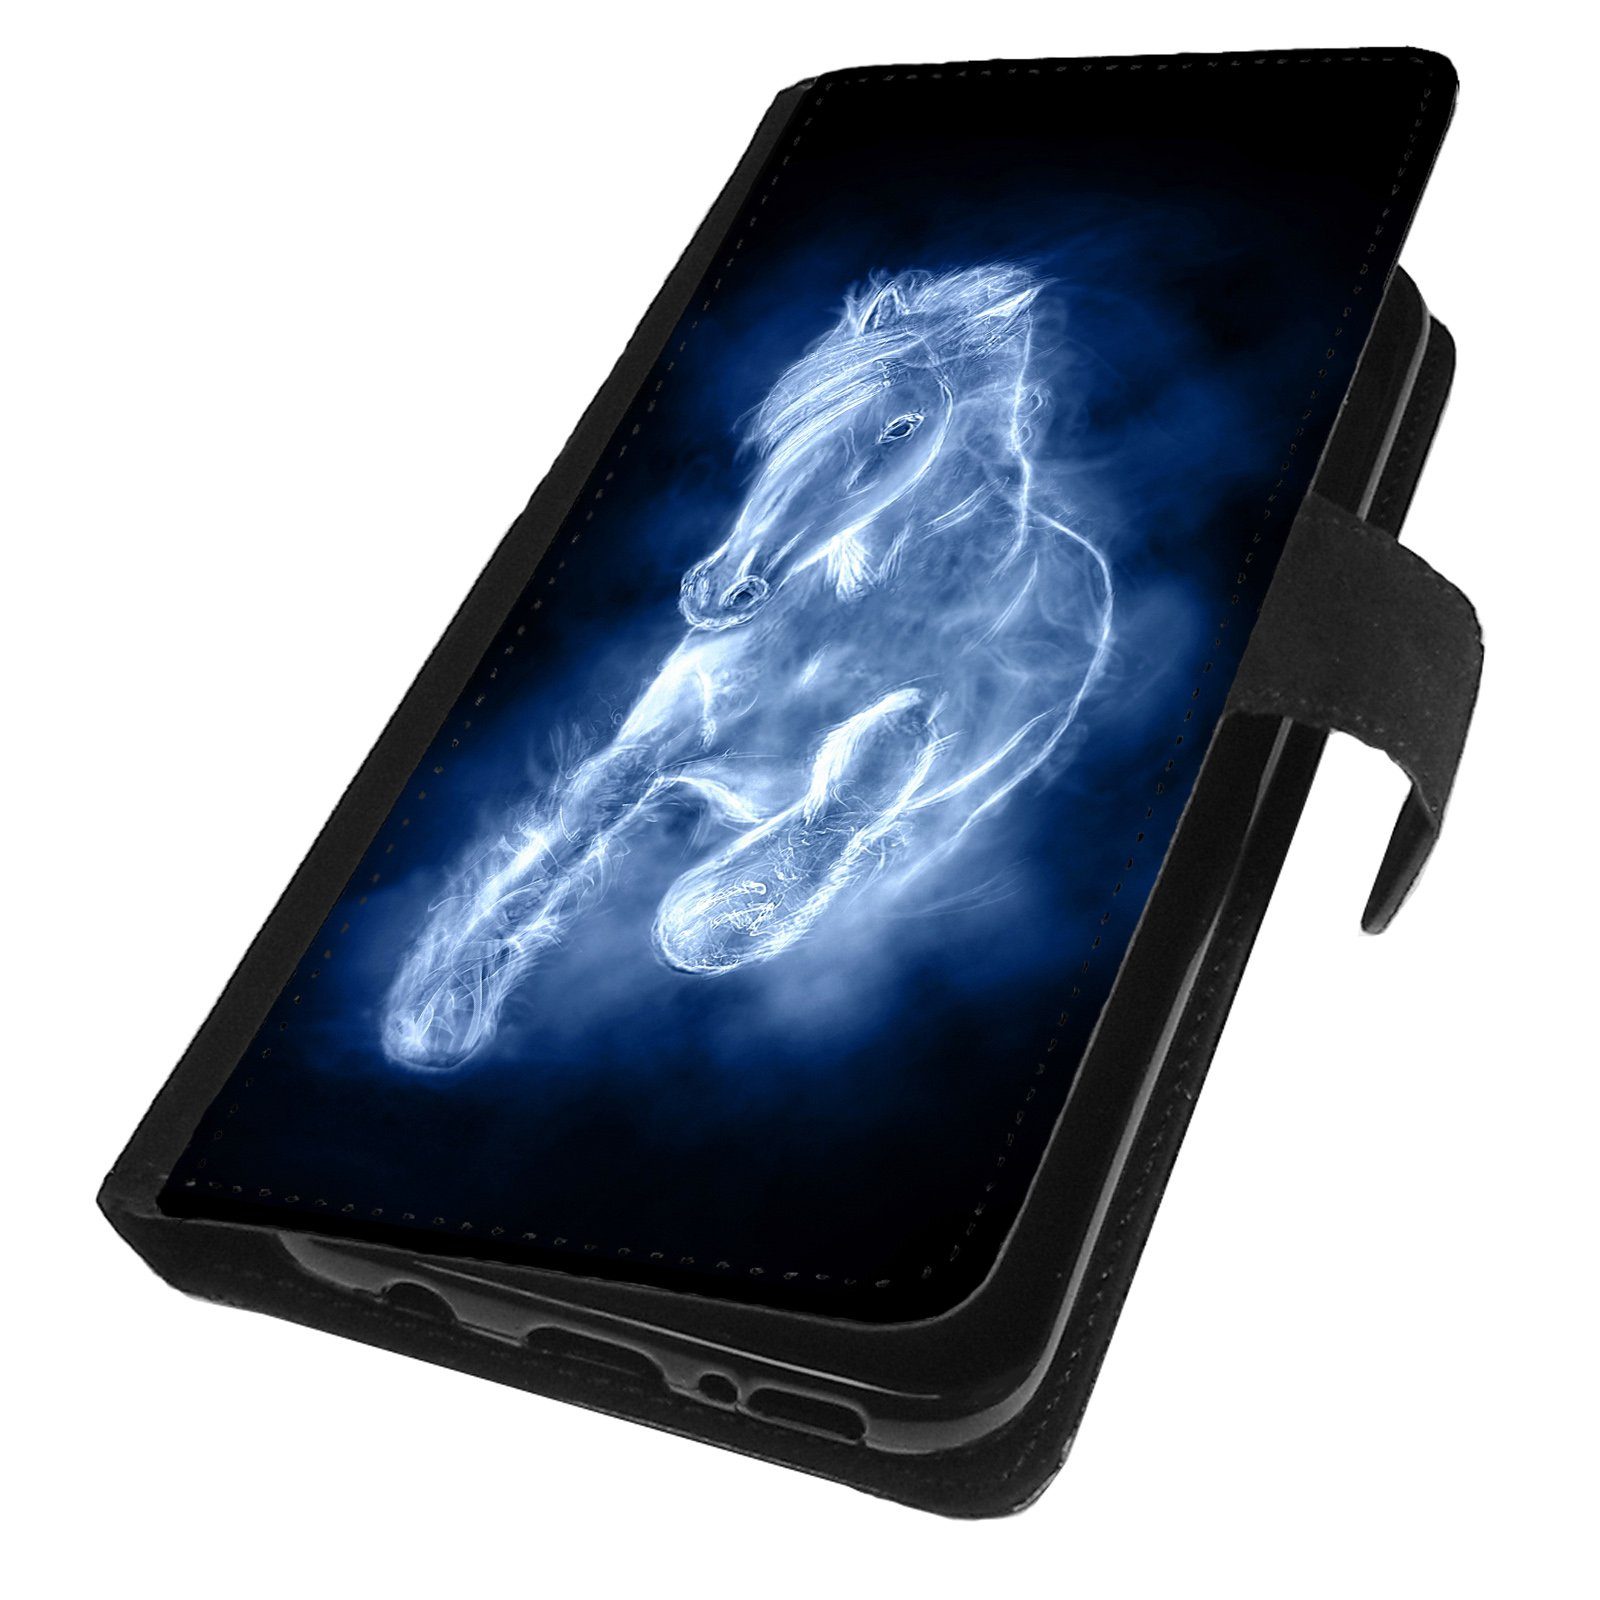 Traumhuelle Smartphone-Hülle MOTIV 113 Pferd Blau Hülle für iPhone Xiaomi Google Huawei Motorola, Handy Tasche Case Cover Schutzhülle Etui Silikon